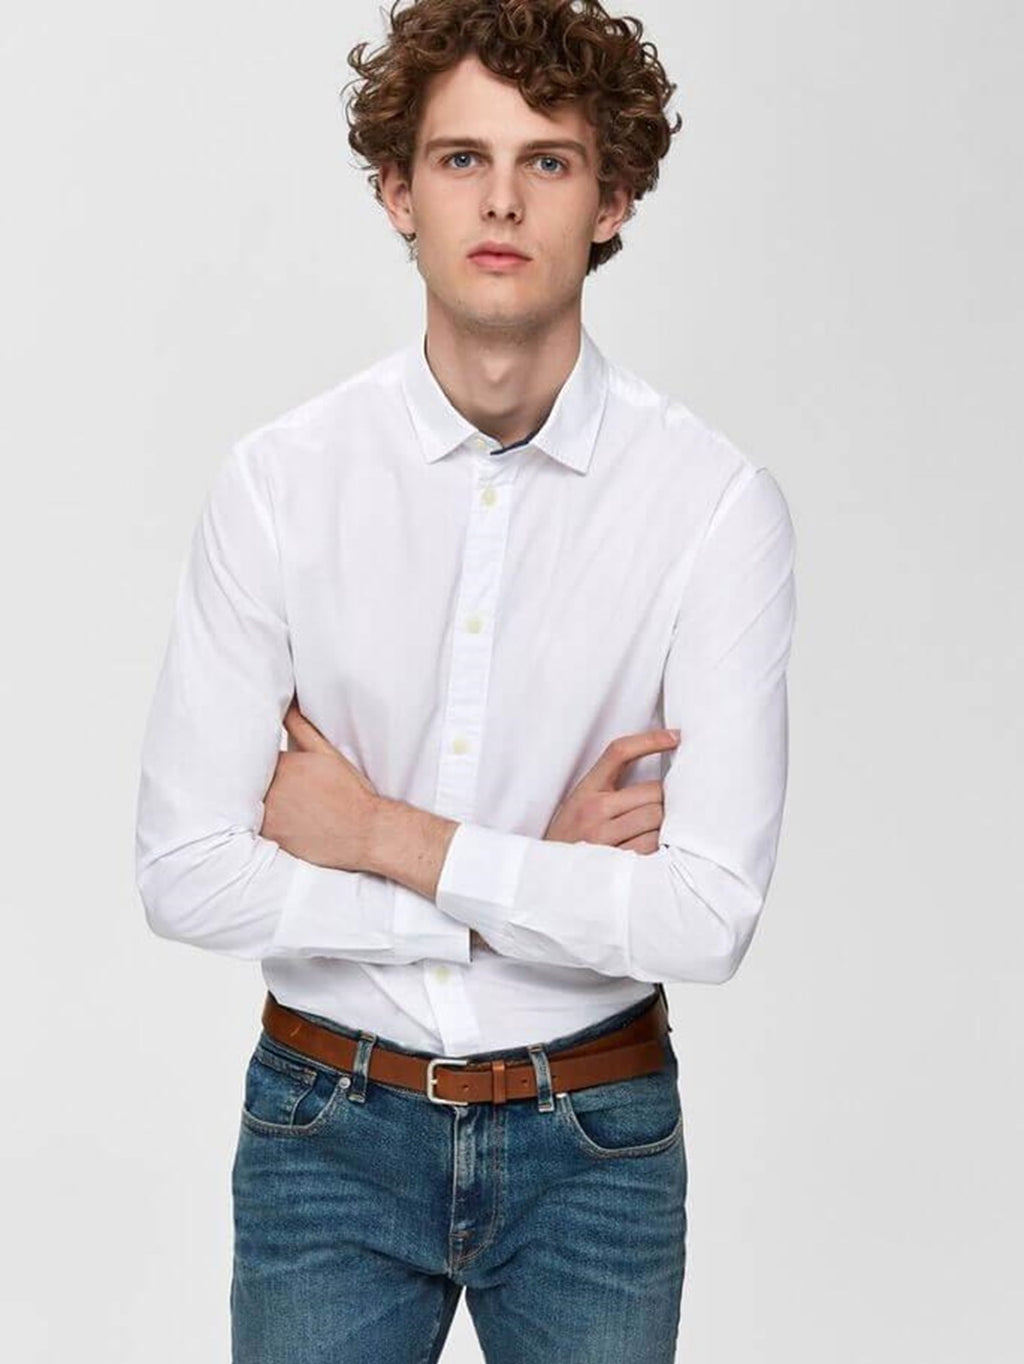 Oxford Skjorte - Hvit